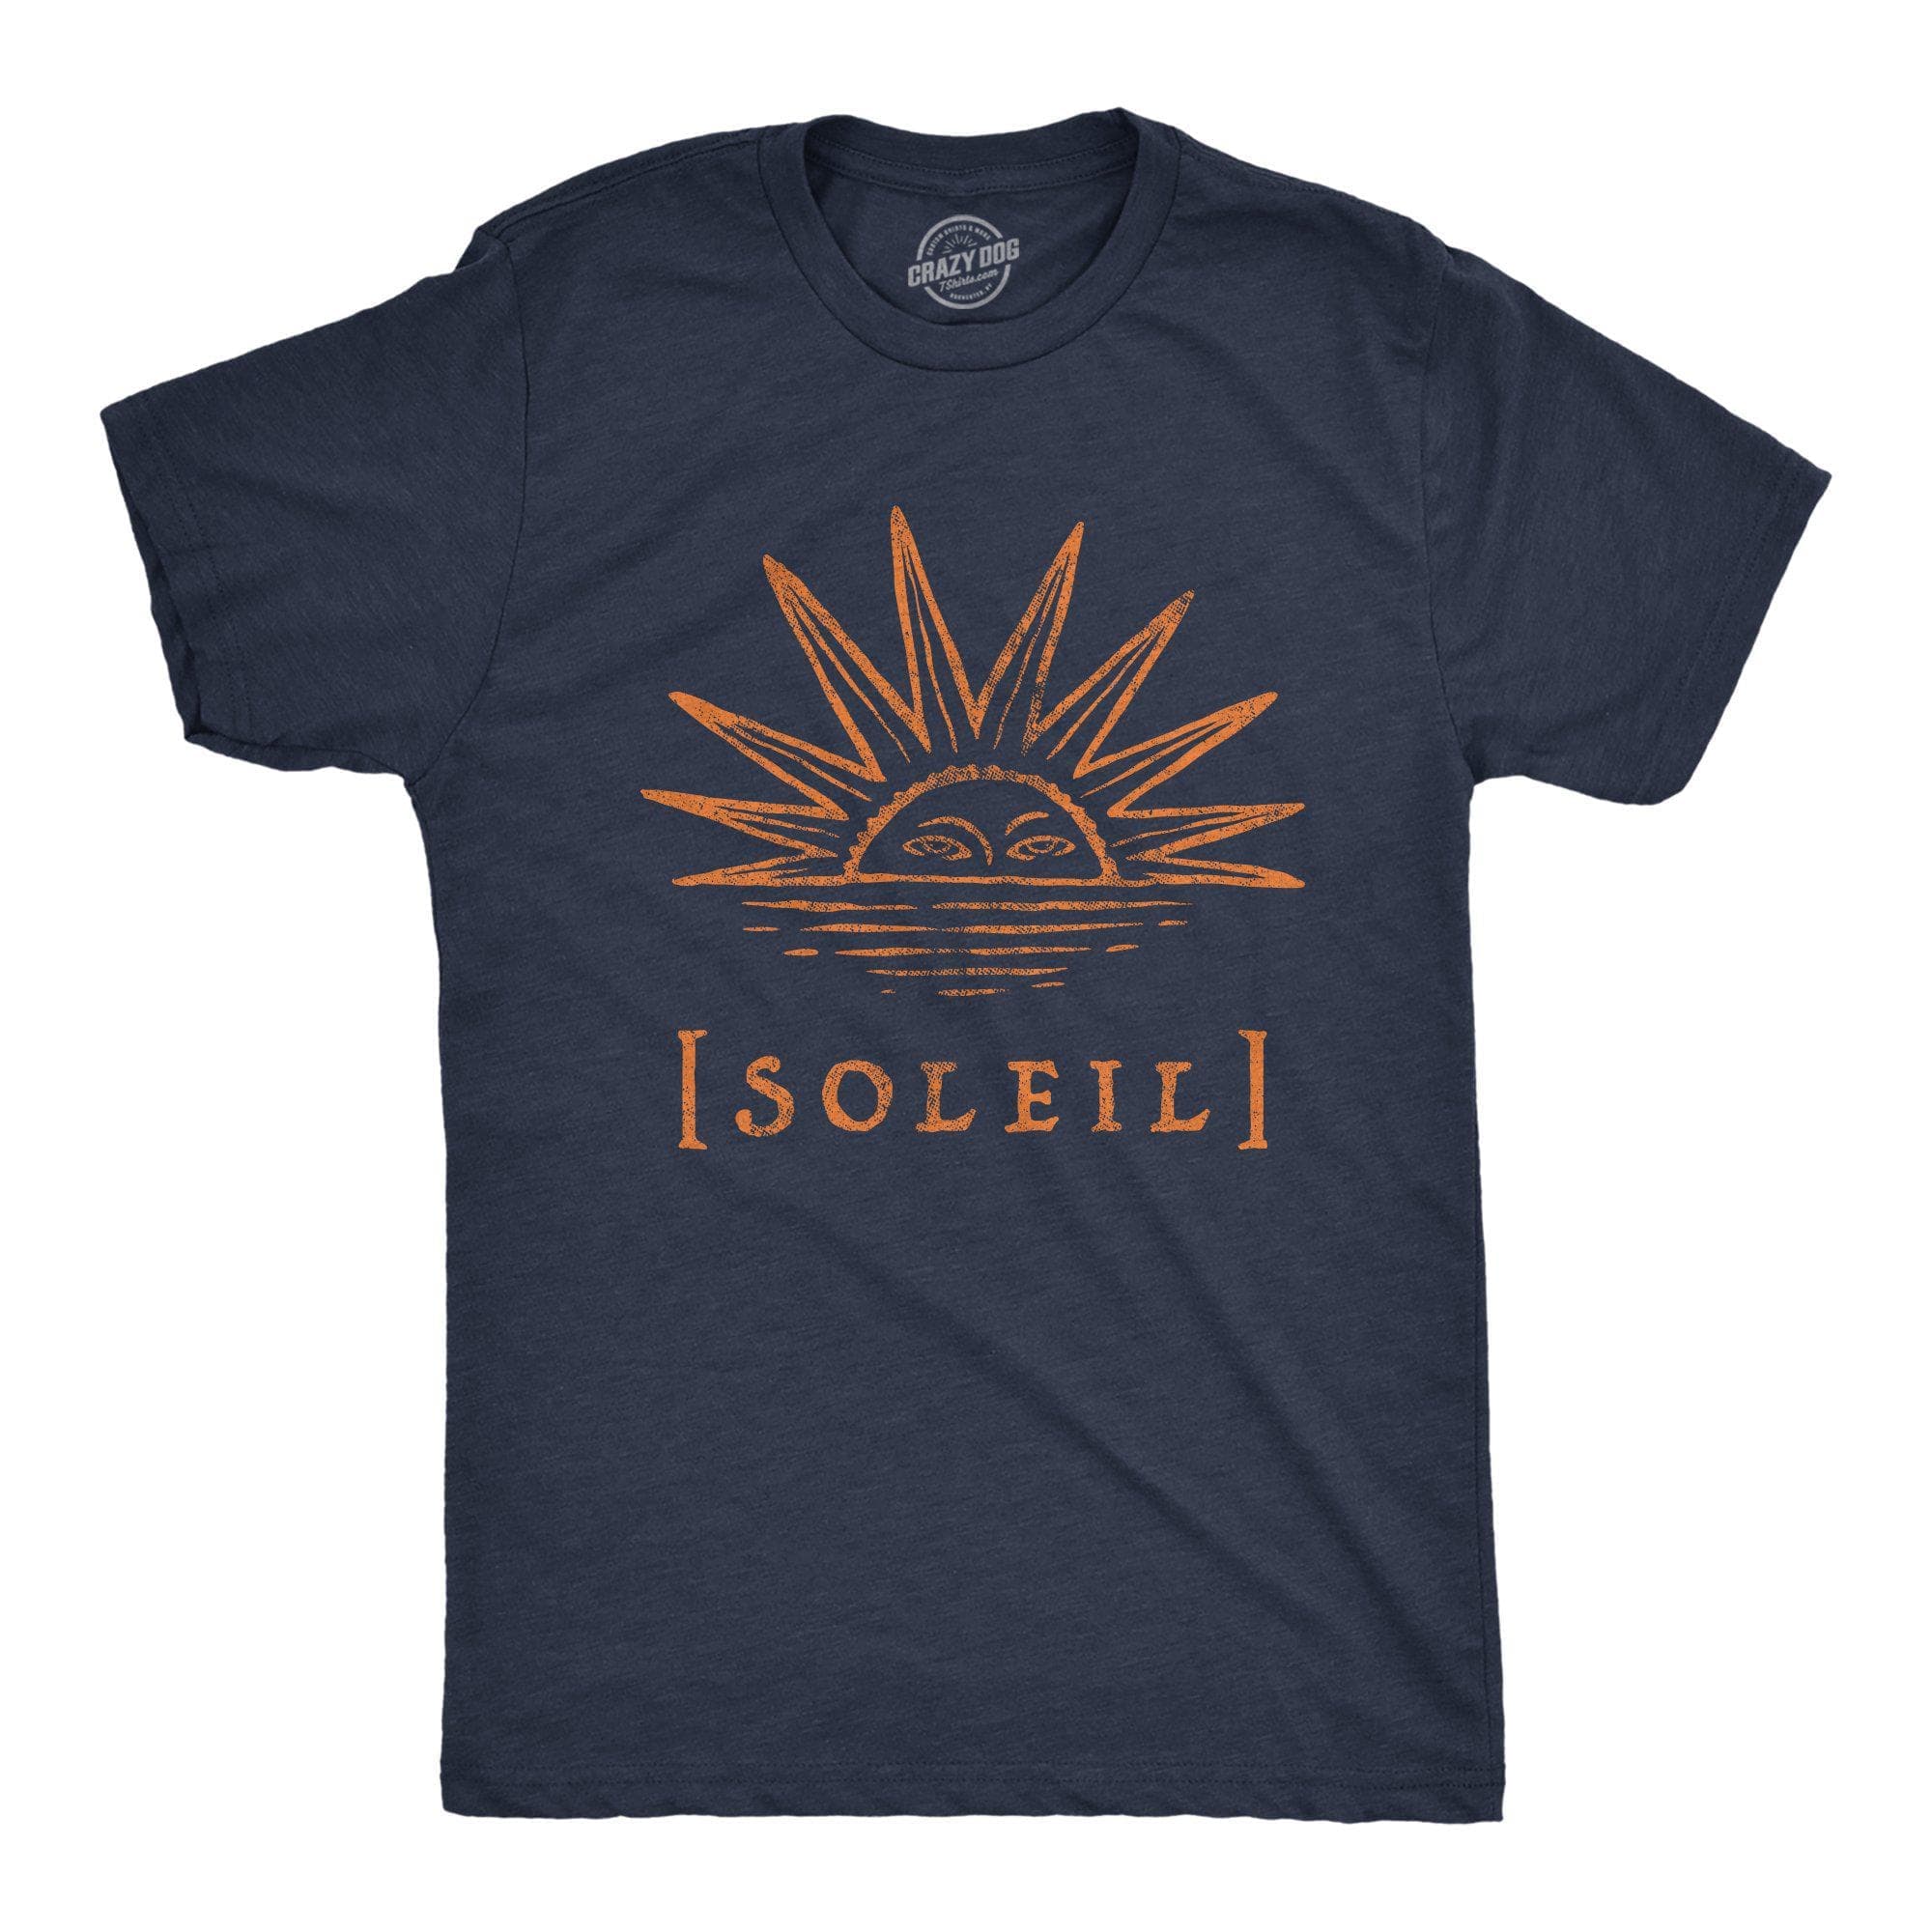 Soleil Men's Tshirt - Crazy Dog T-Shirts